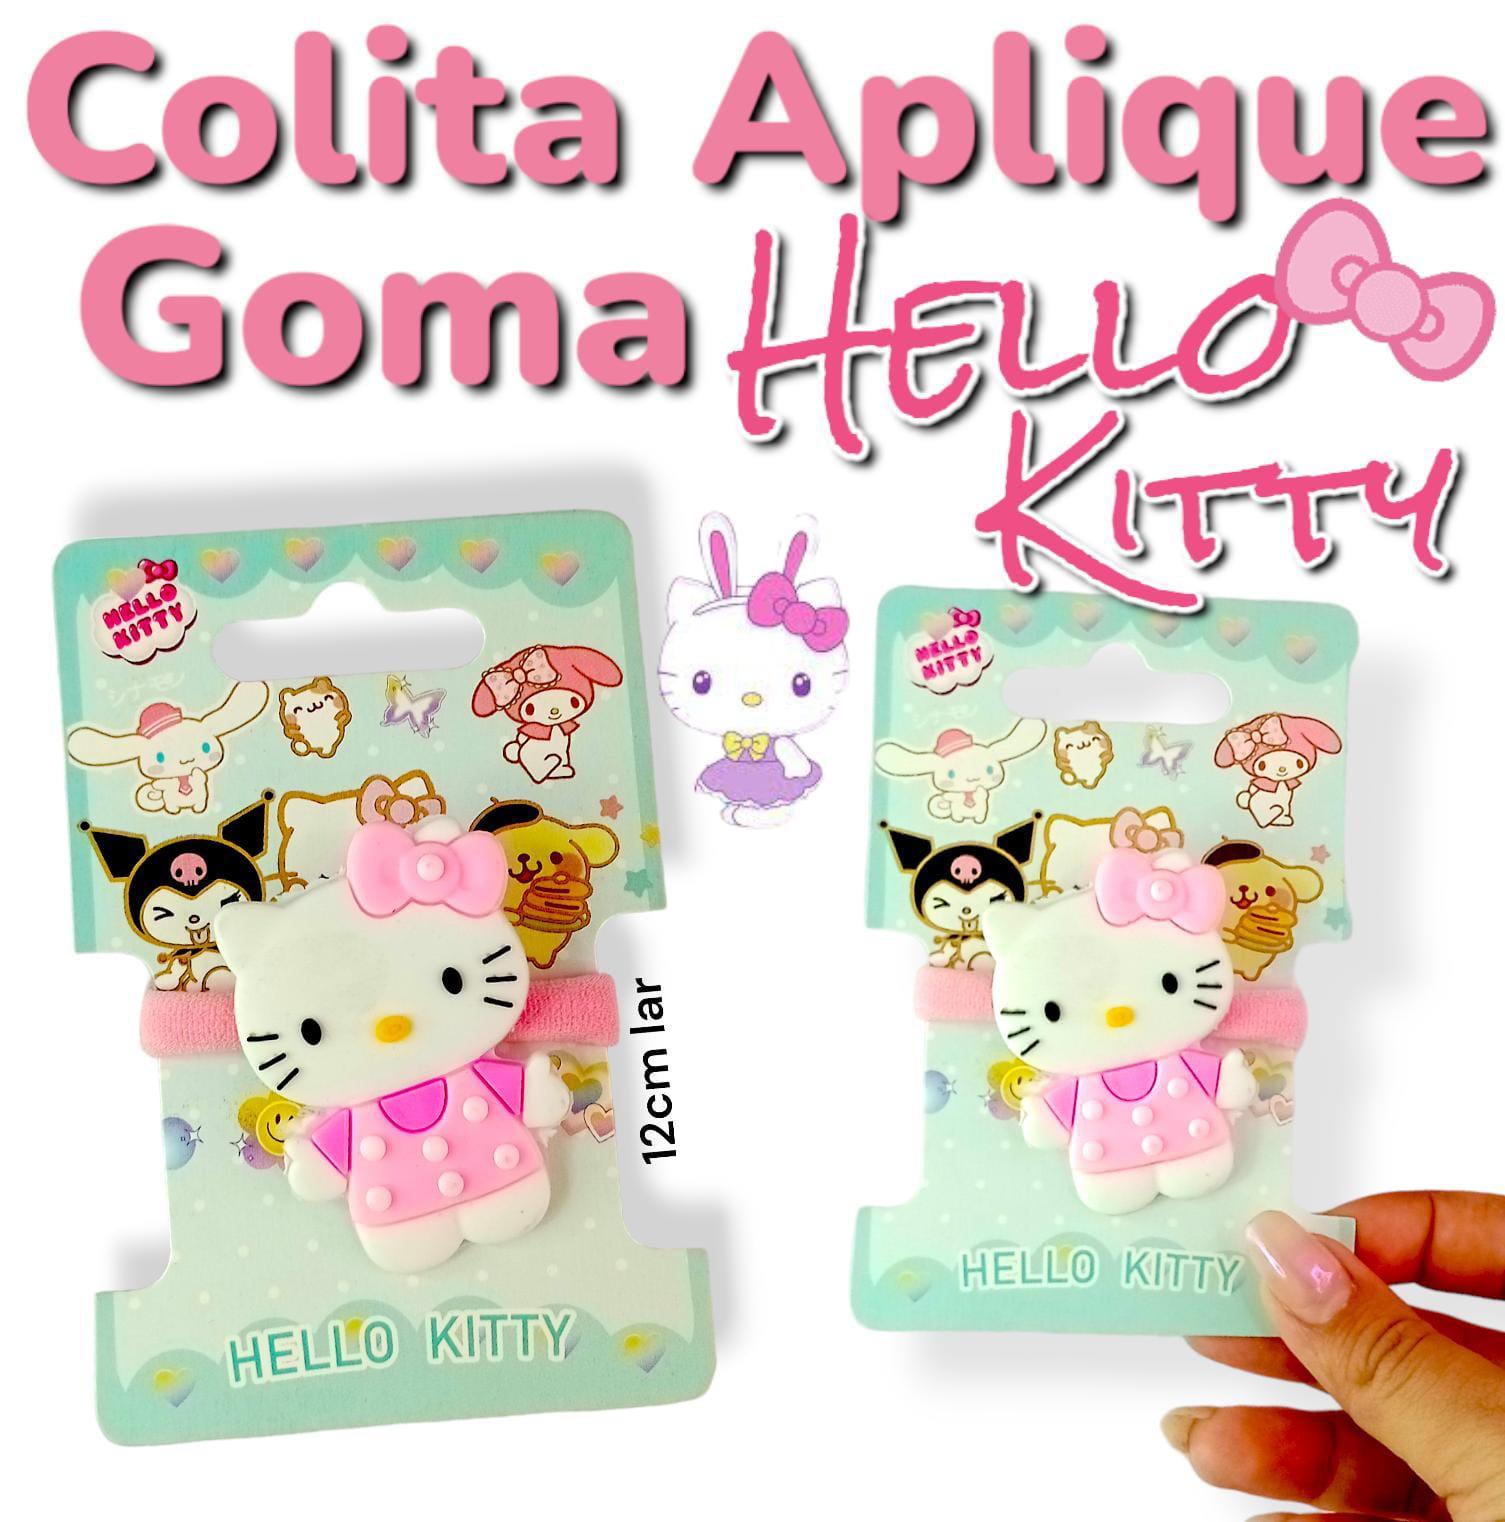 Colita Aplique Goma HELLO KITTY 